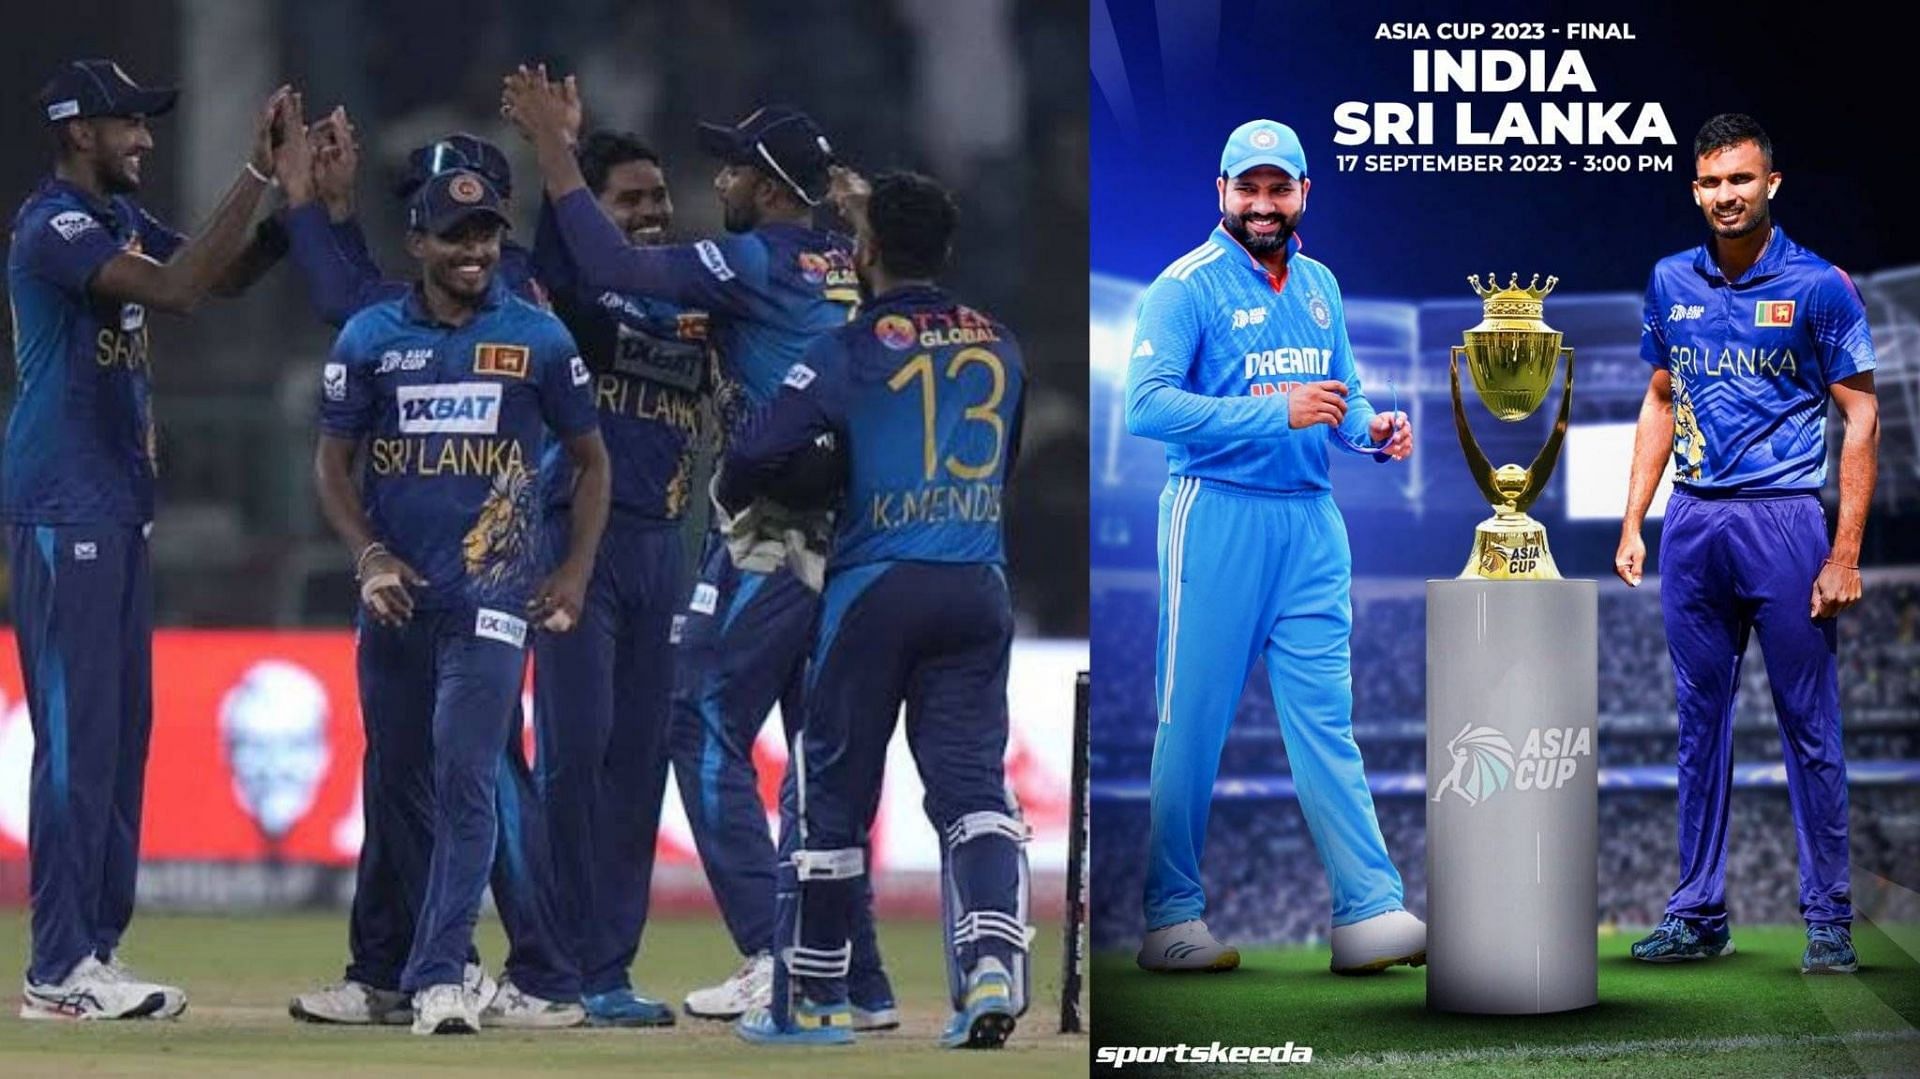 India will take on Sri Lanka in Asia Cup 2023 Final